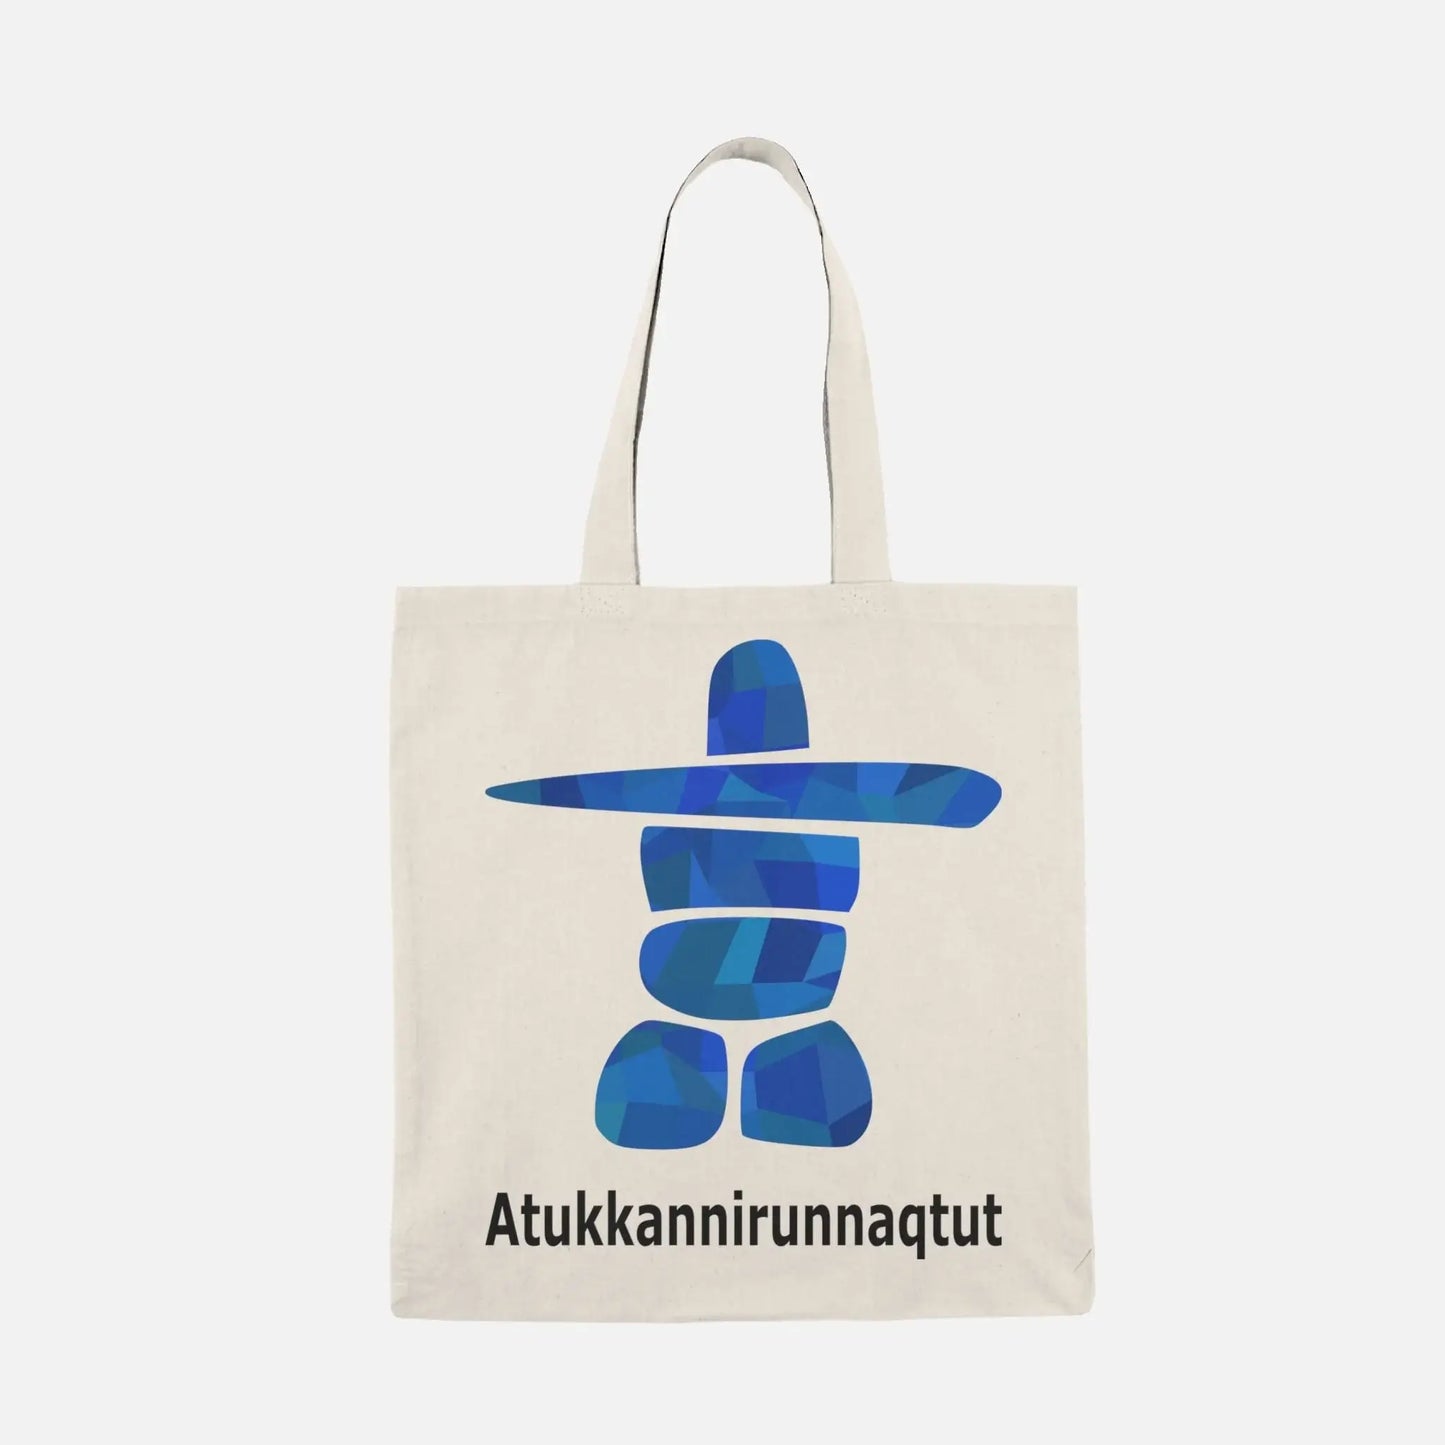 Atukkannirunnaqtut (Recycling) Tote Bag